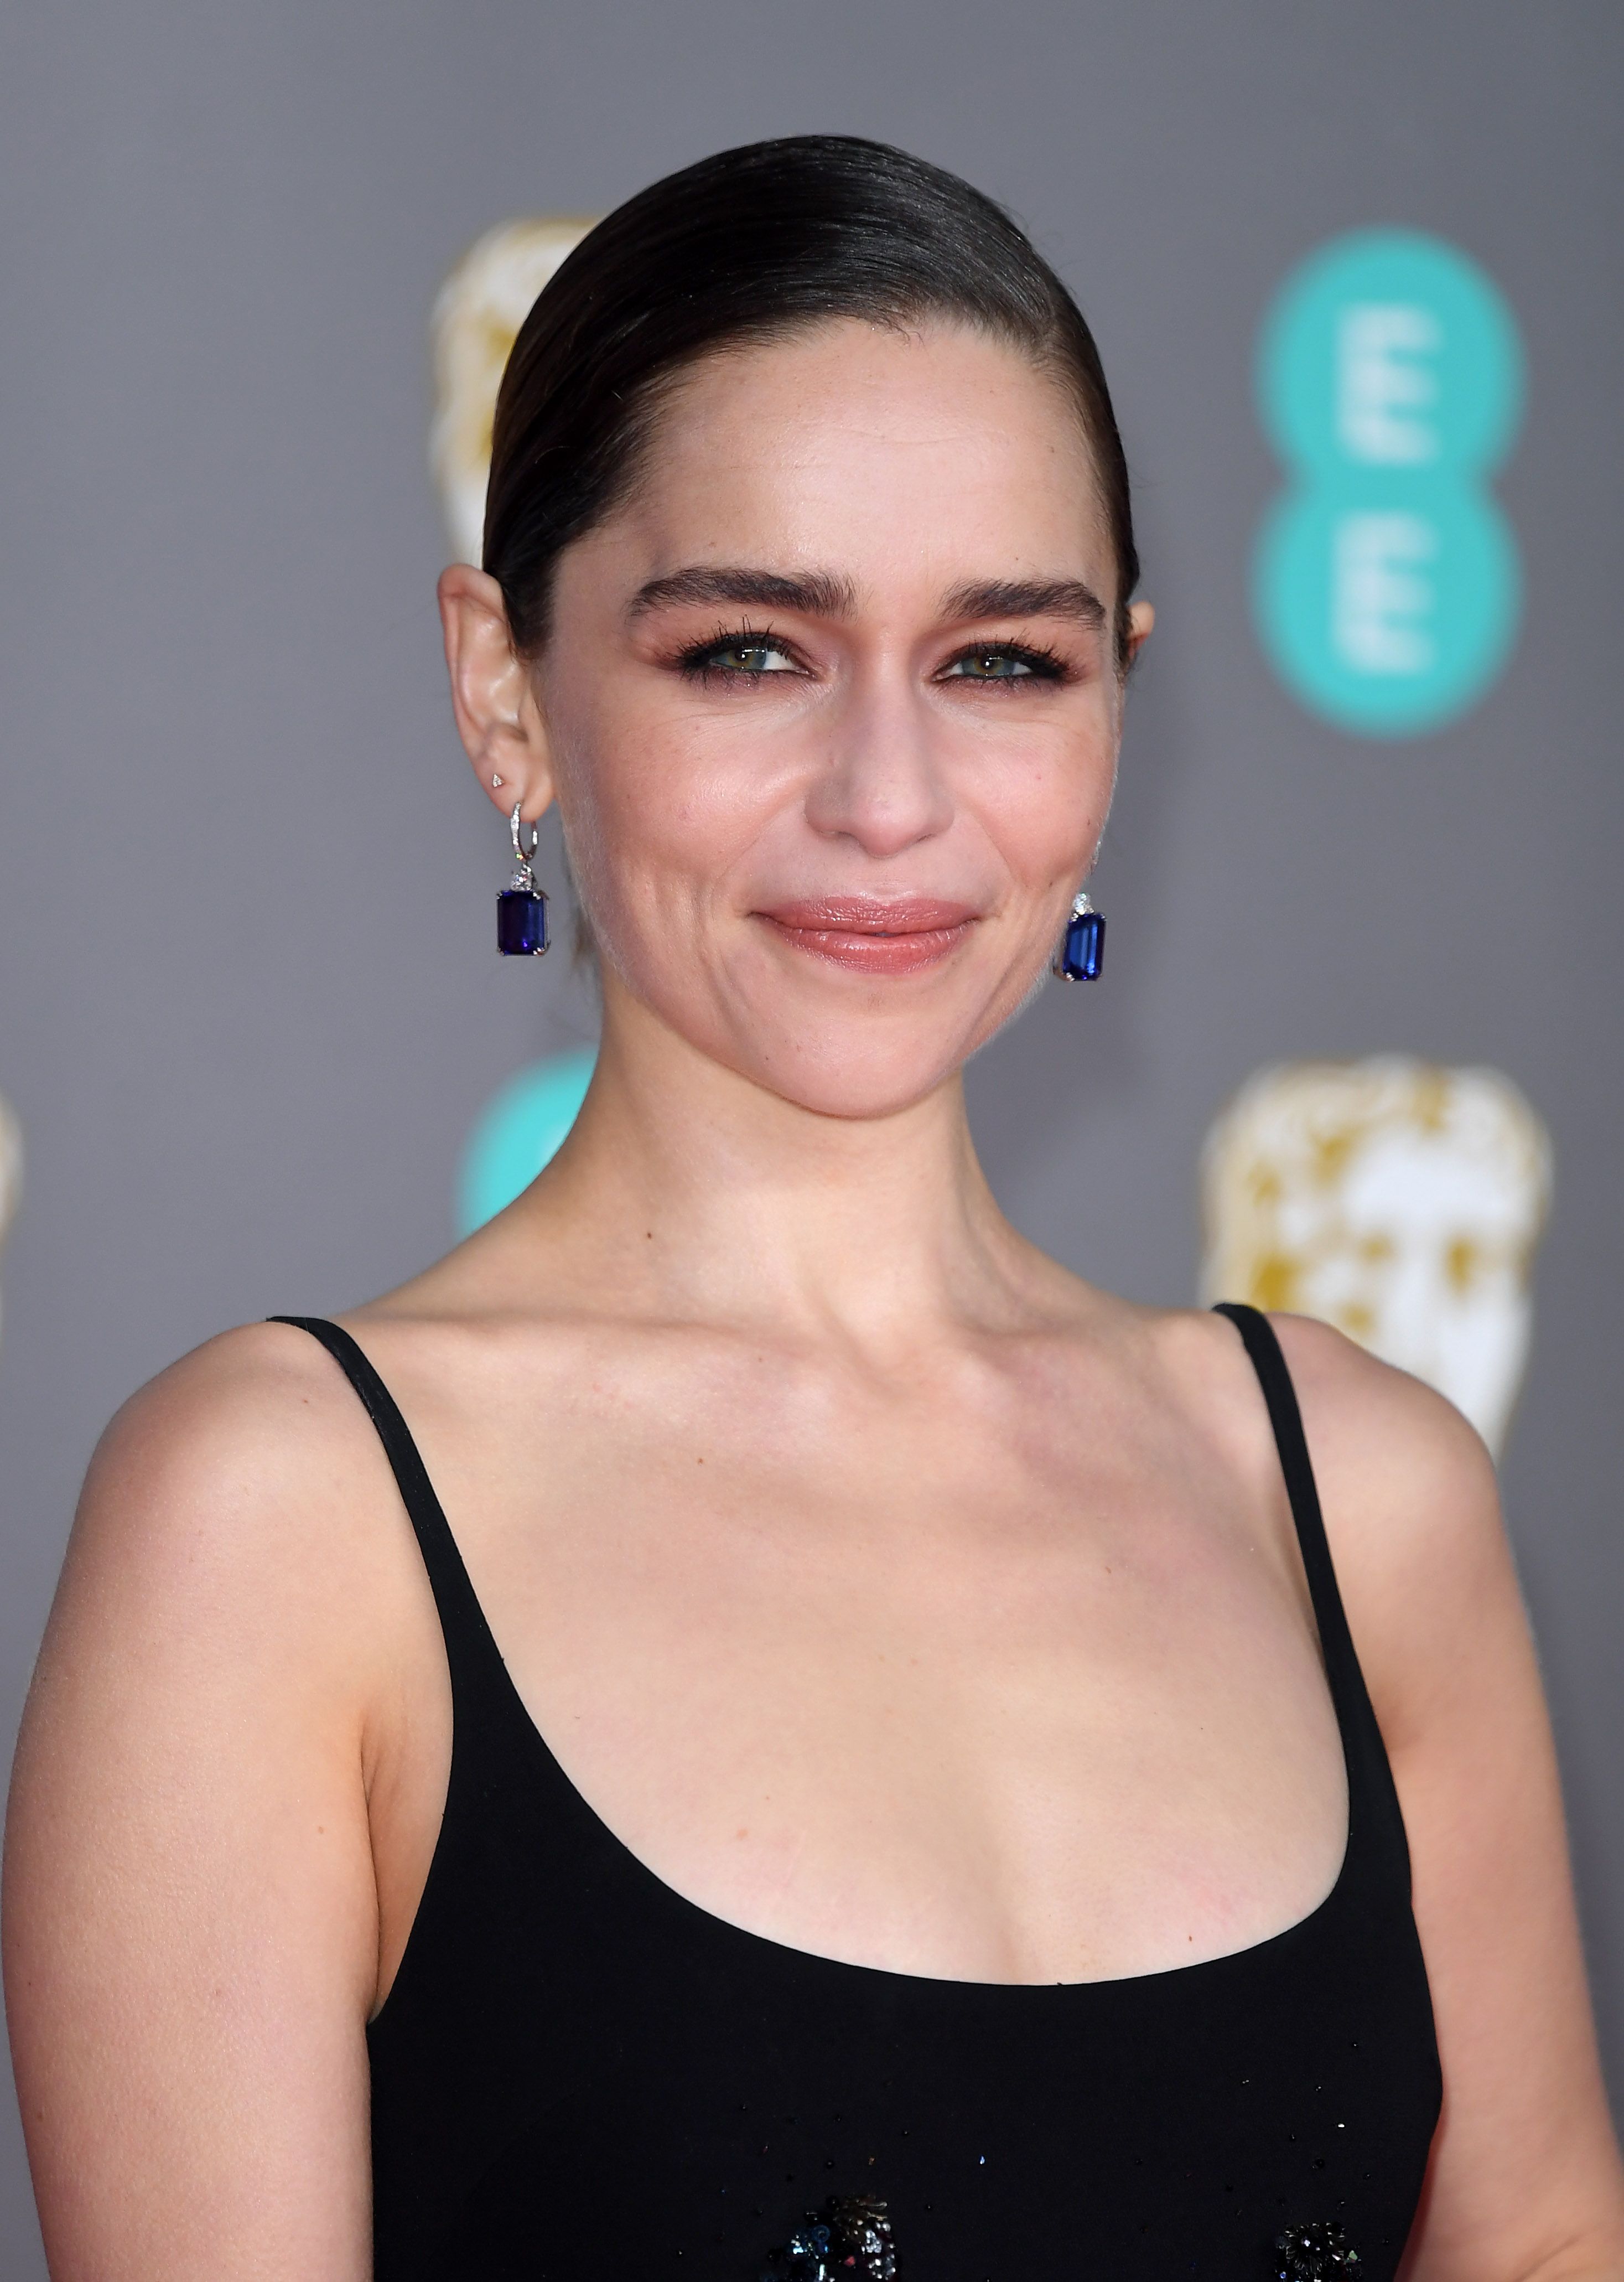 Marvel's Secret Invasion adds Emilia Clarke to the Disney Plus show's cast